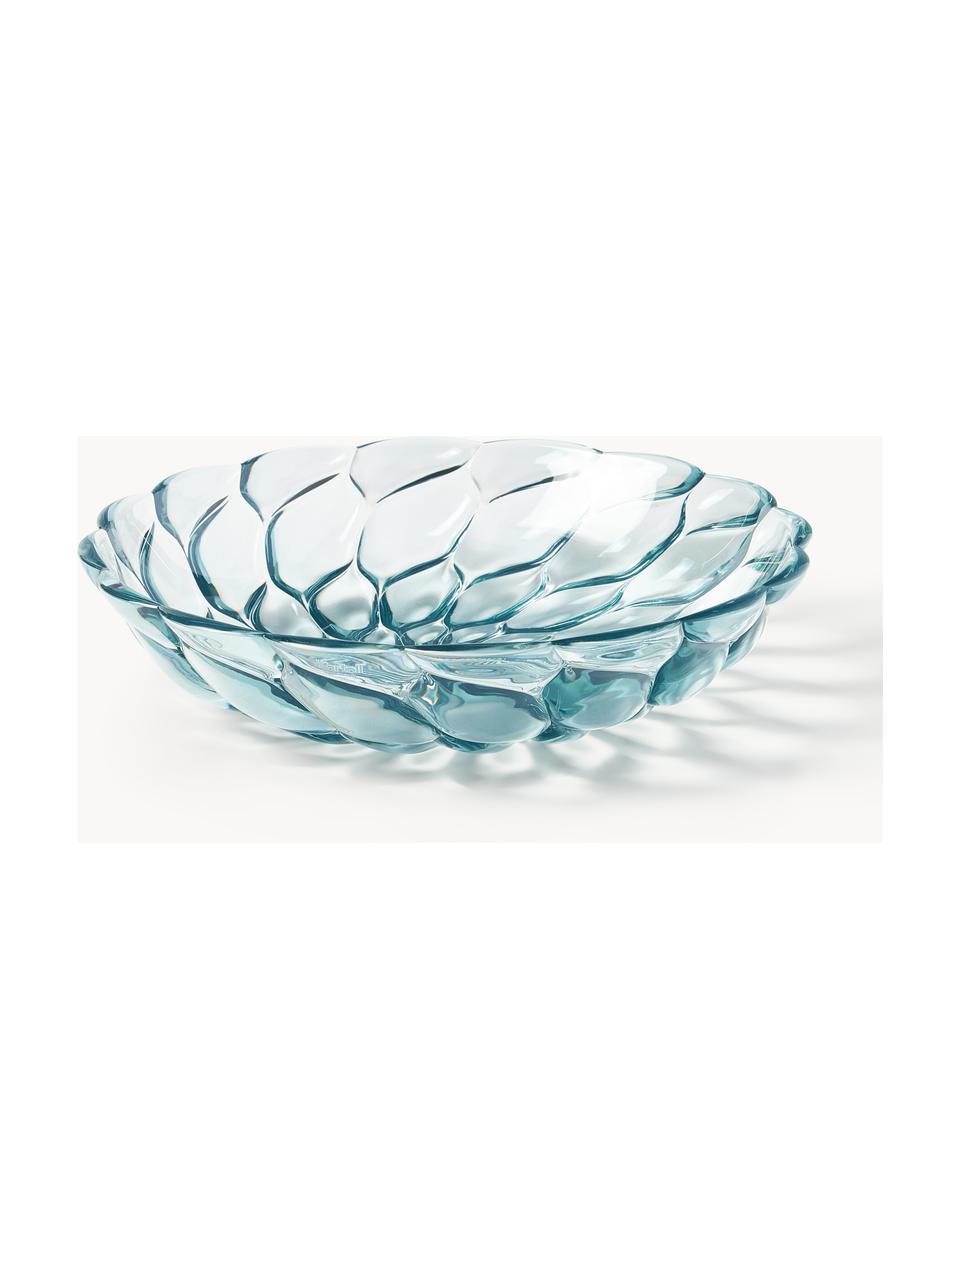 Platos hondos con relieve Jellies, 4 uds., Plástico, Azul claro, Ø 22 cm